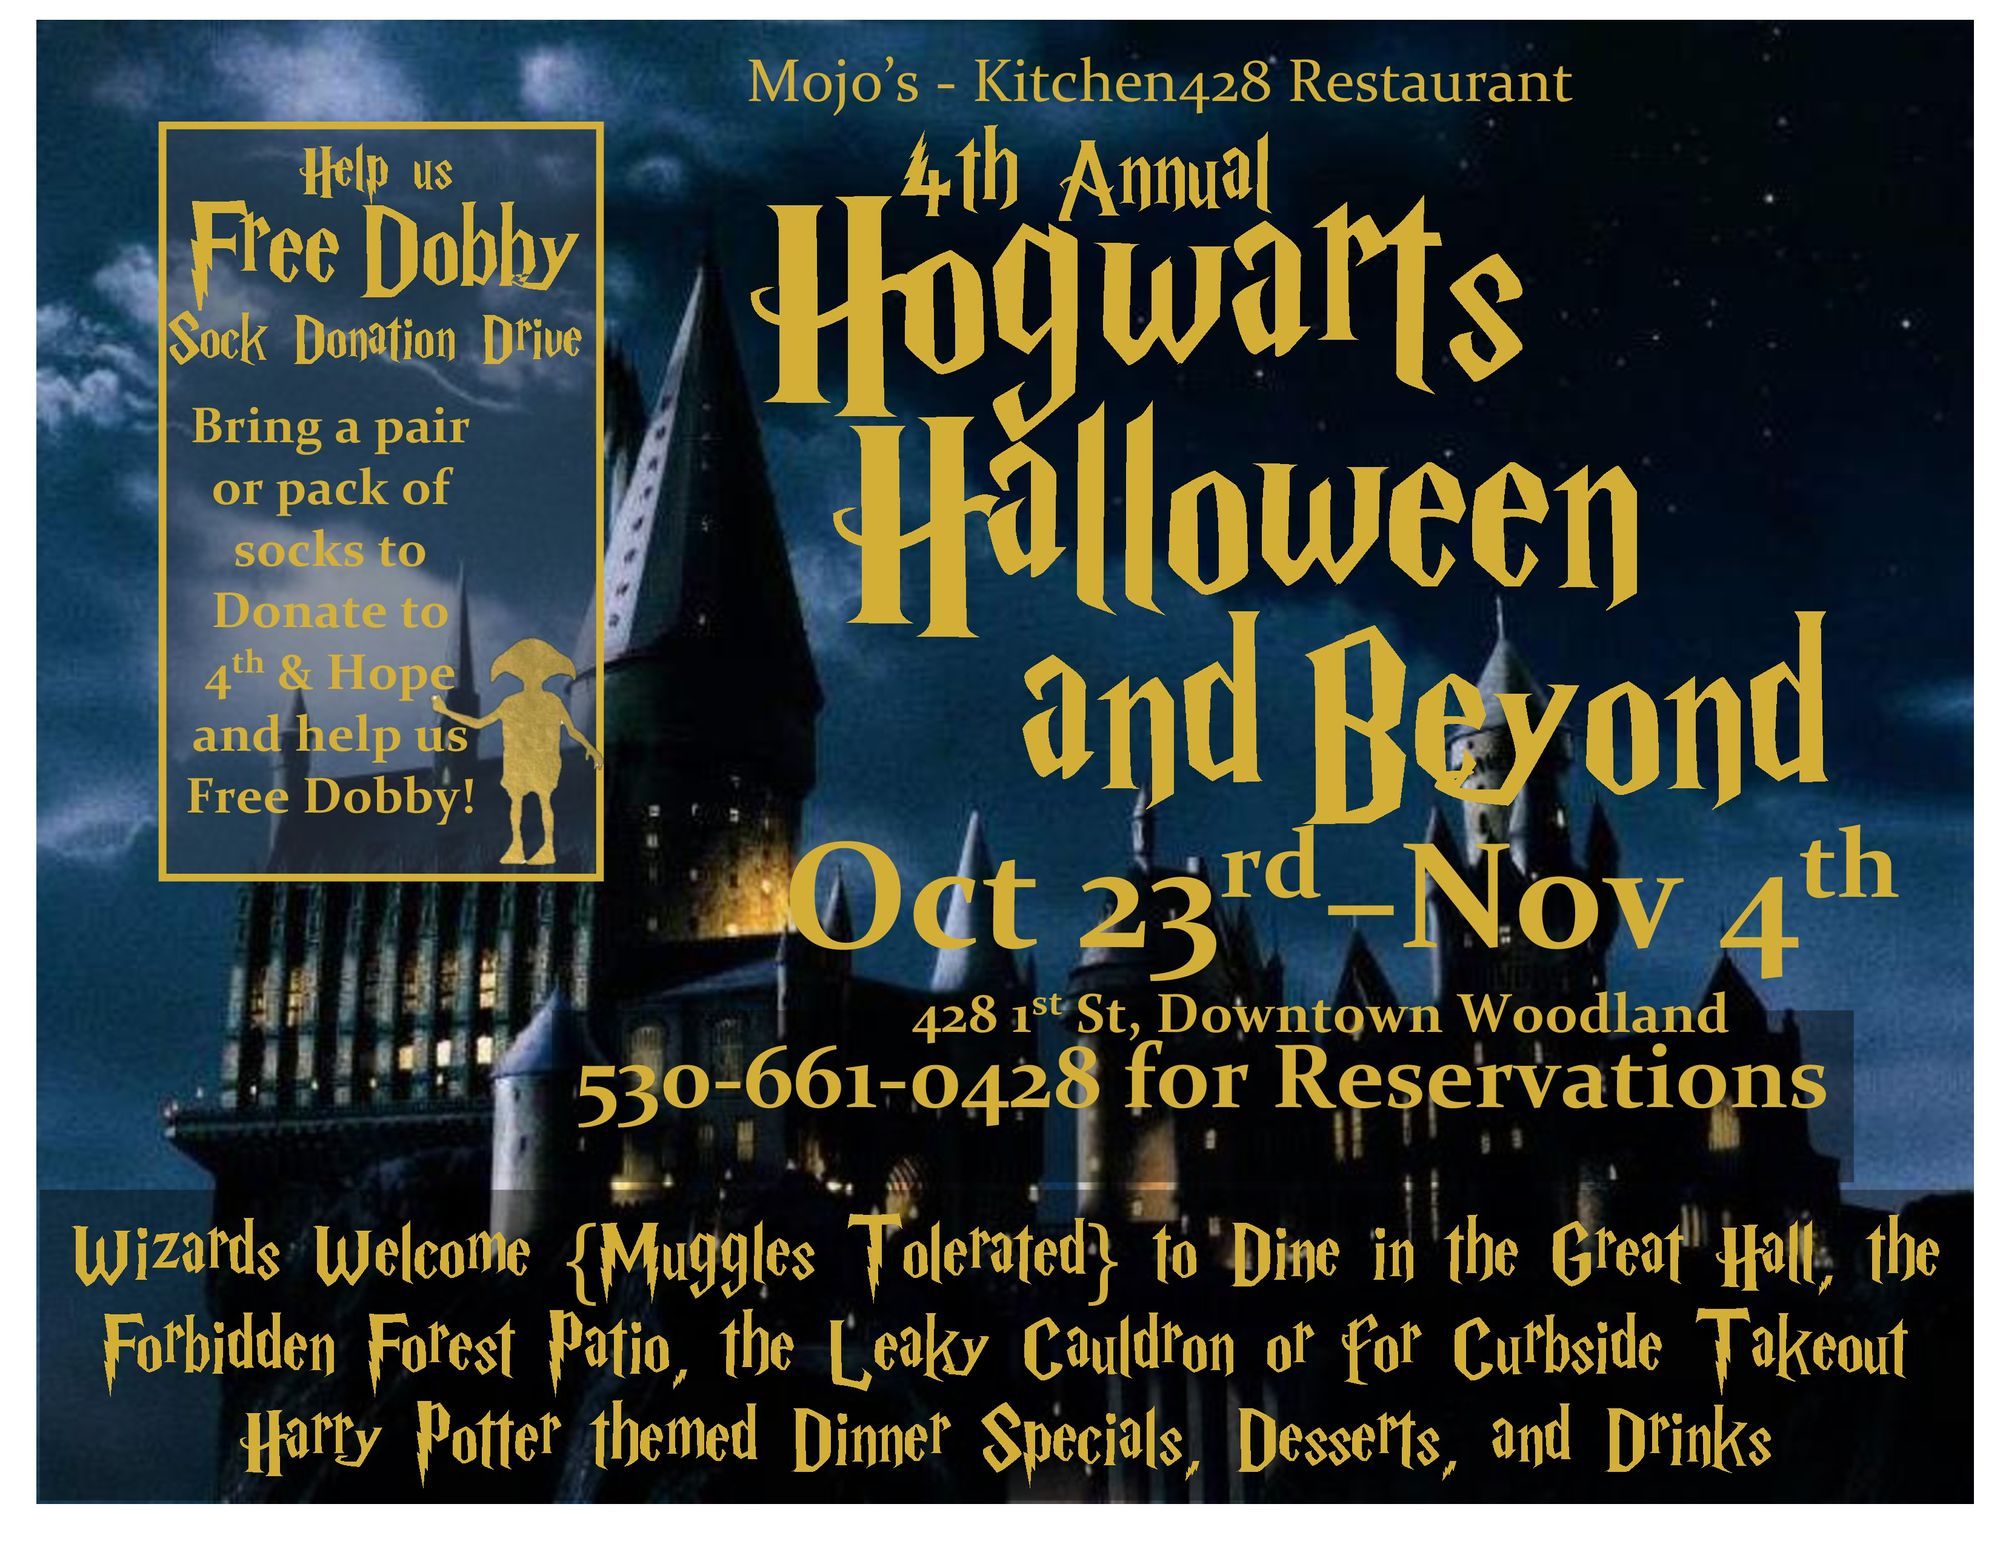 Hogwarts Halloween & Beyond